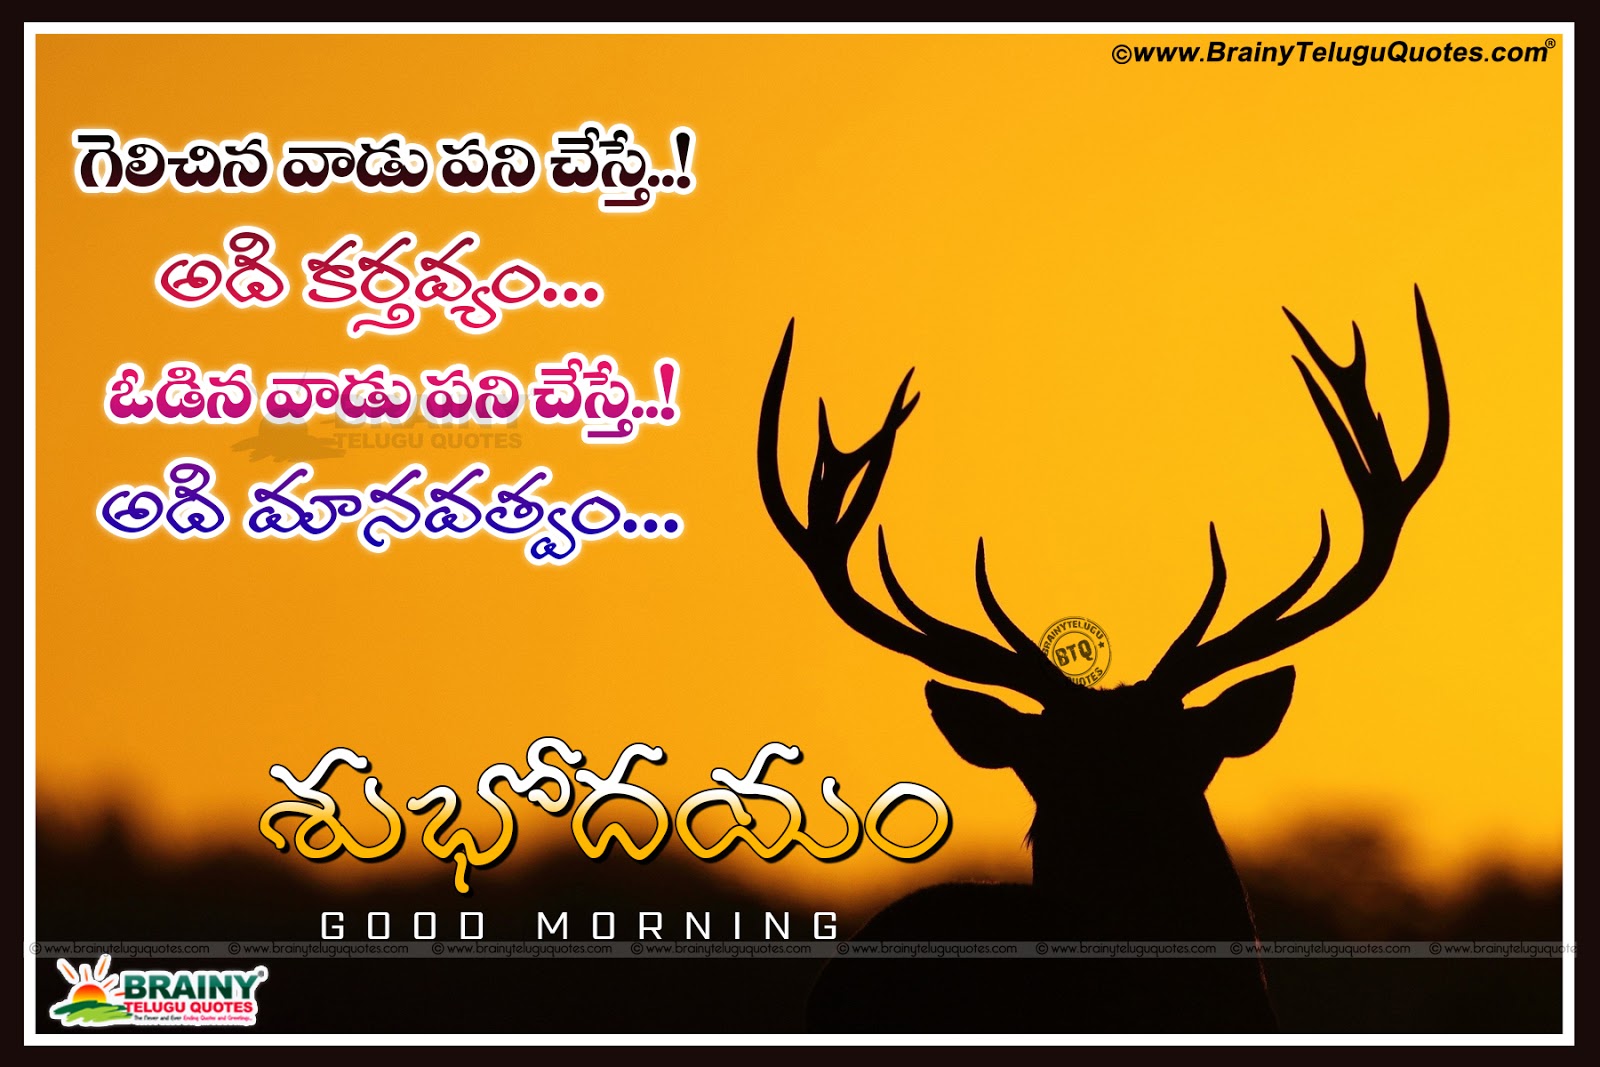 Subhodayam Inspirational Quotes In Telugu Good Morning Greetings